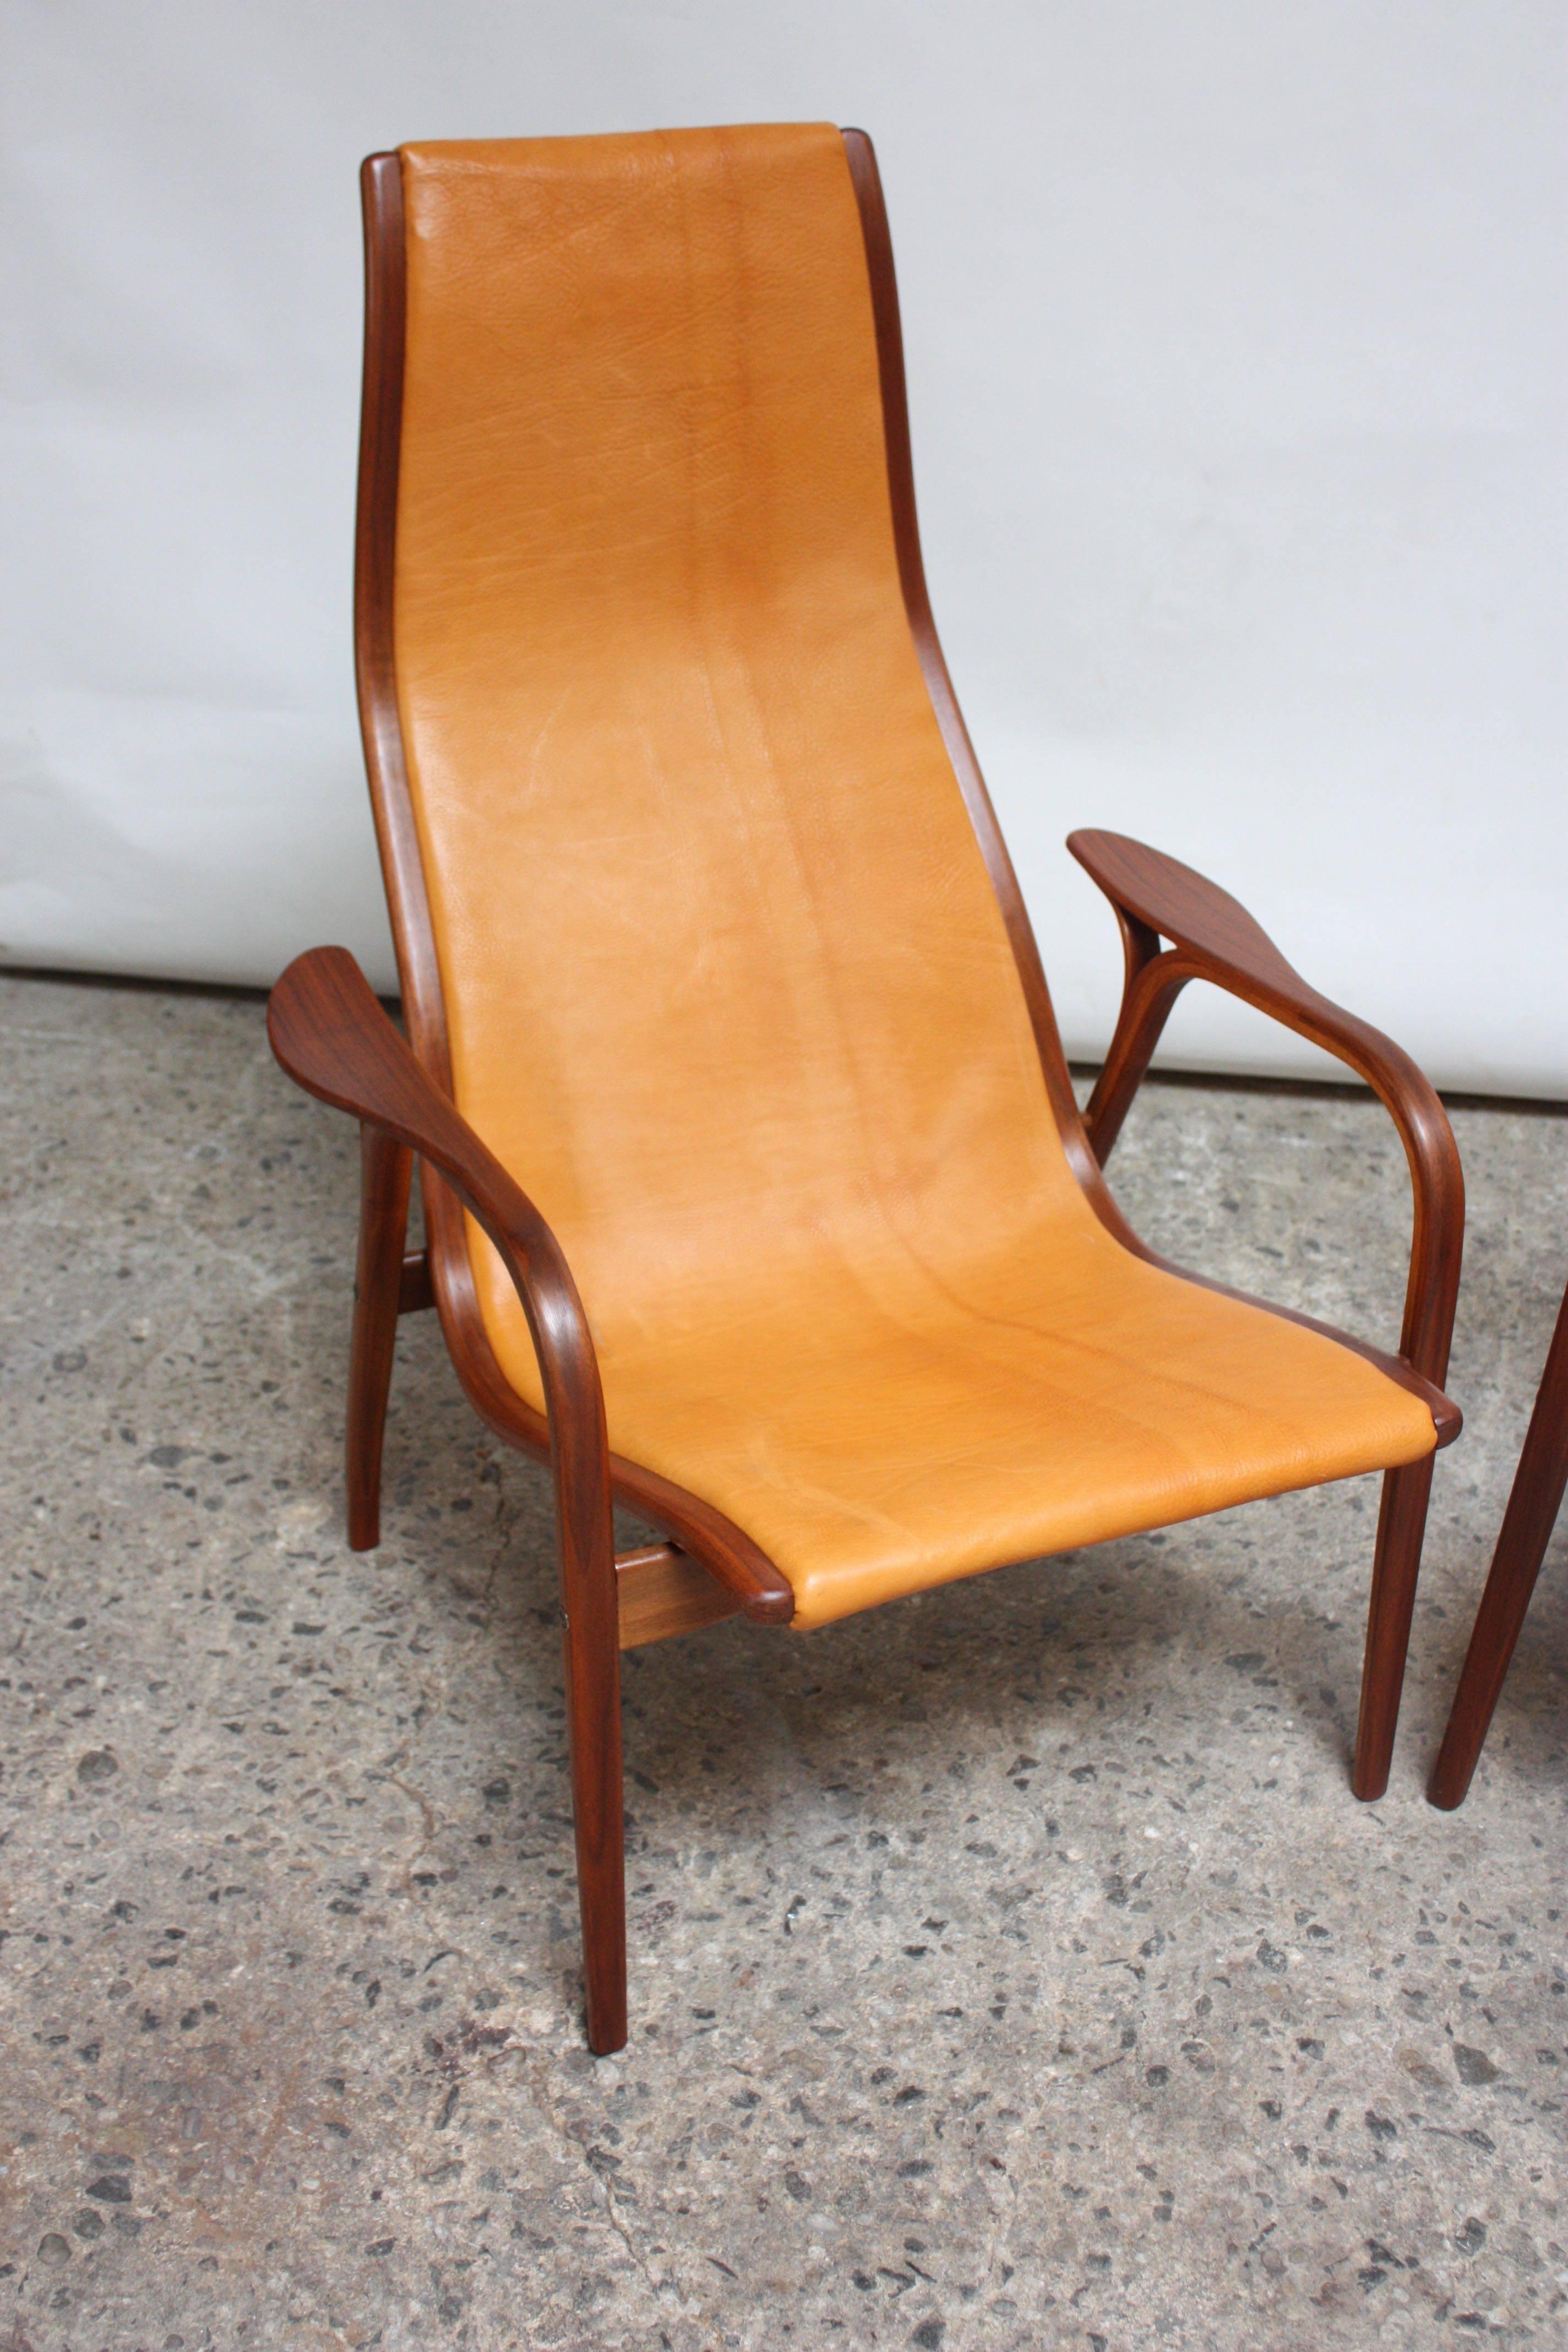 Pair of Swedish Teak and Leather 'Lamino' Chairs by Yngve Ekström 1